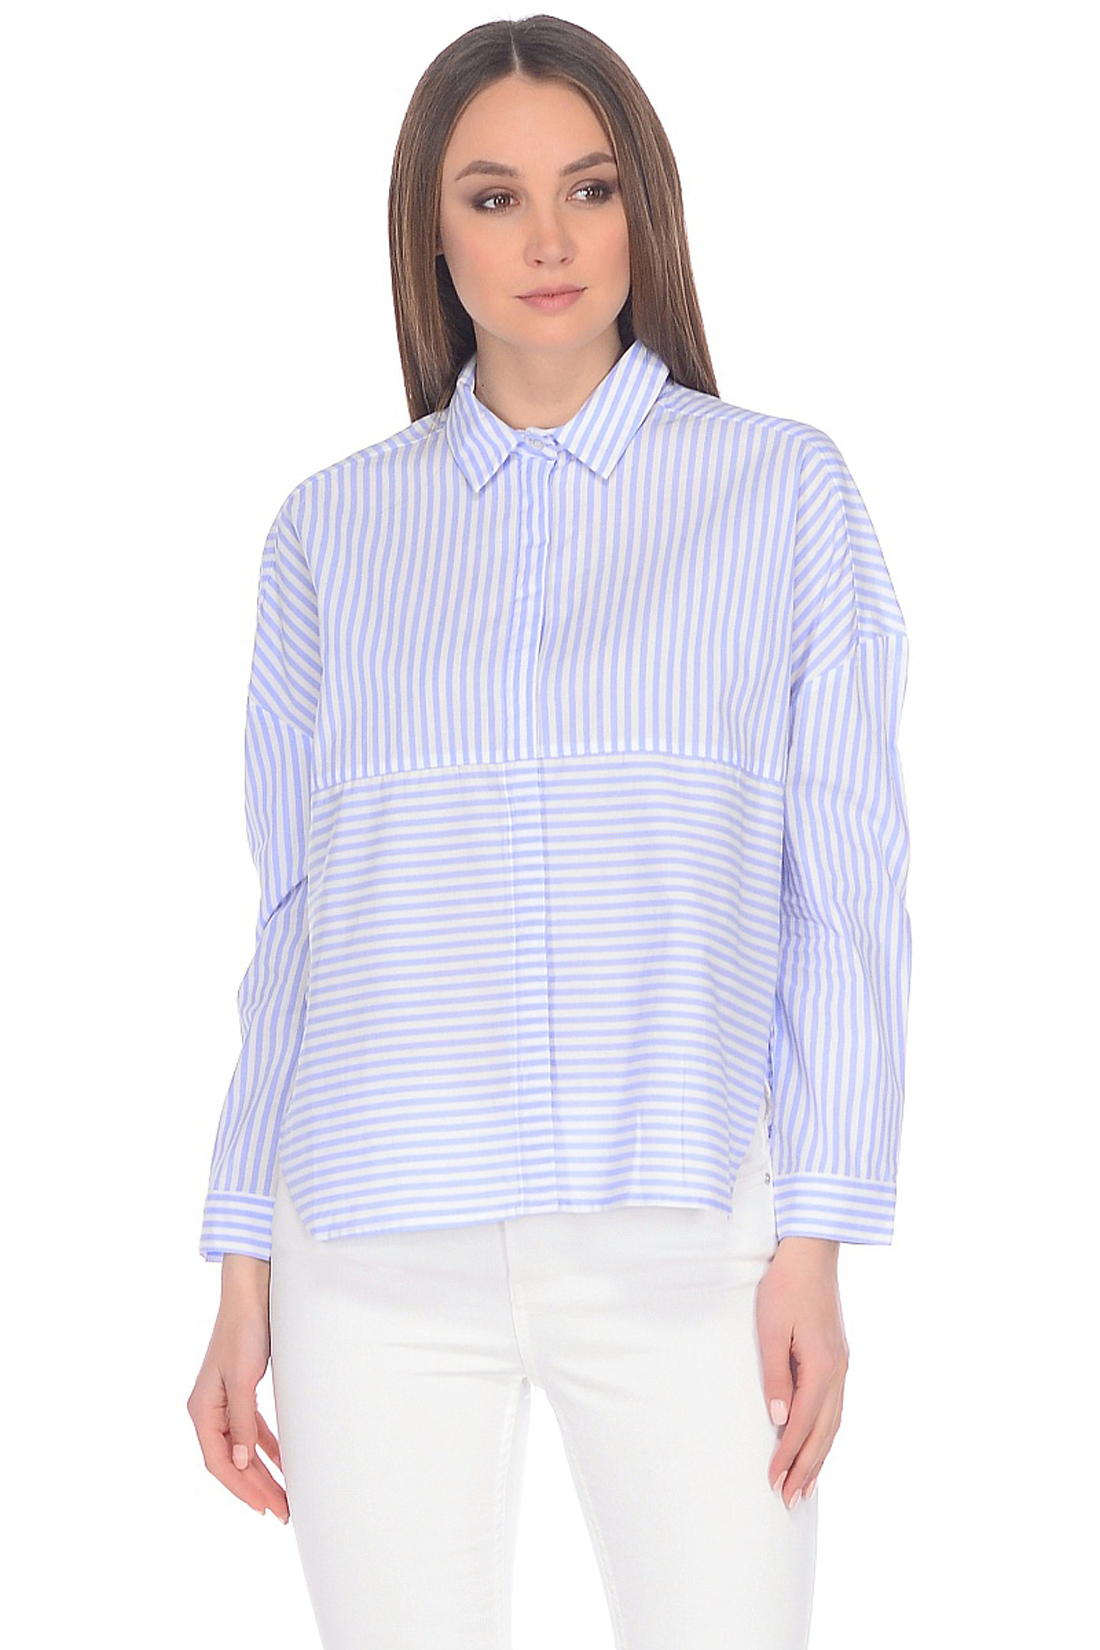 Широкая блузка в голубую полоску (арт. baon B178012), размер S, цвет angel blue striped#голубой Широкая блузка в голубую полоску (арт. baon B178012) - фото 1